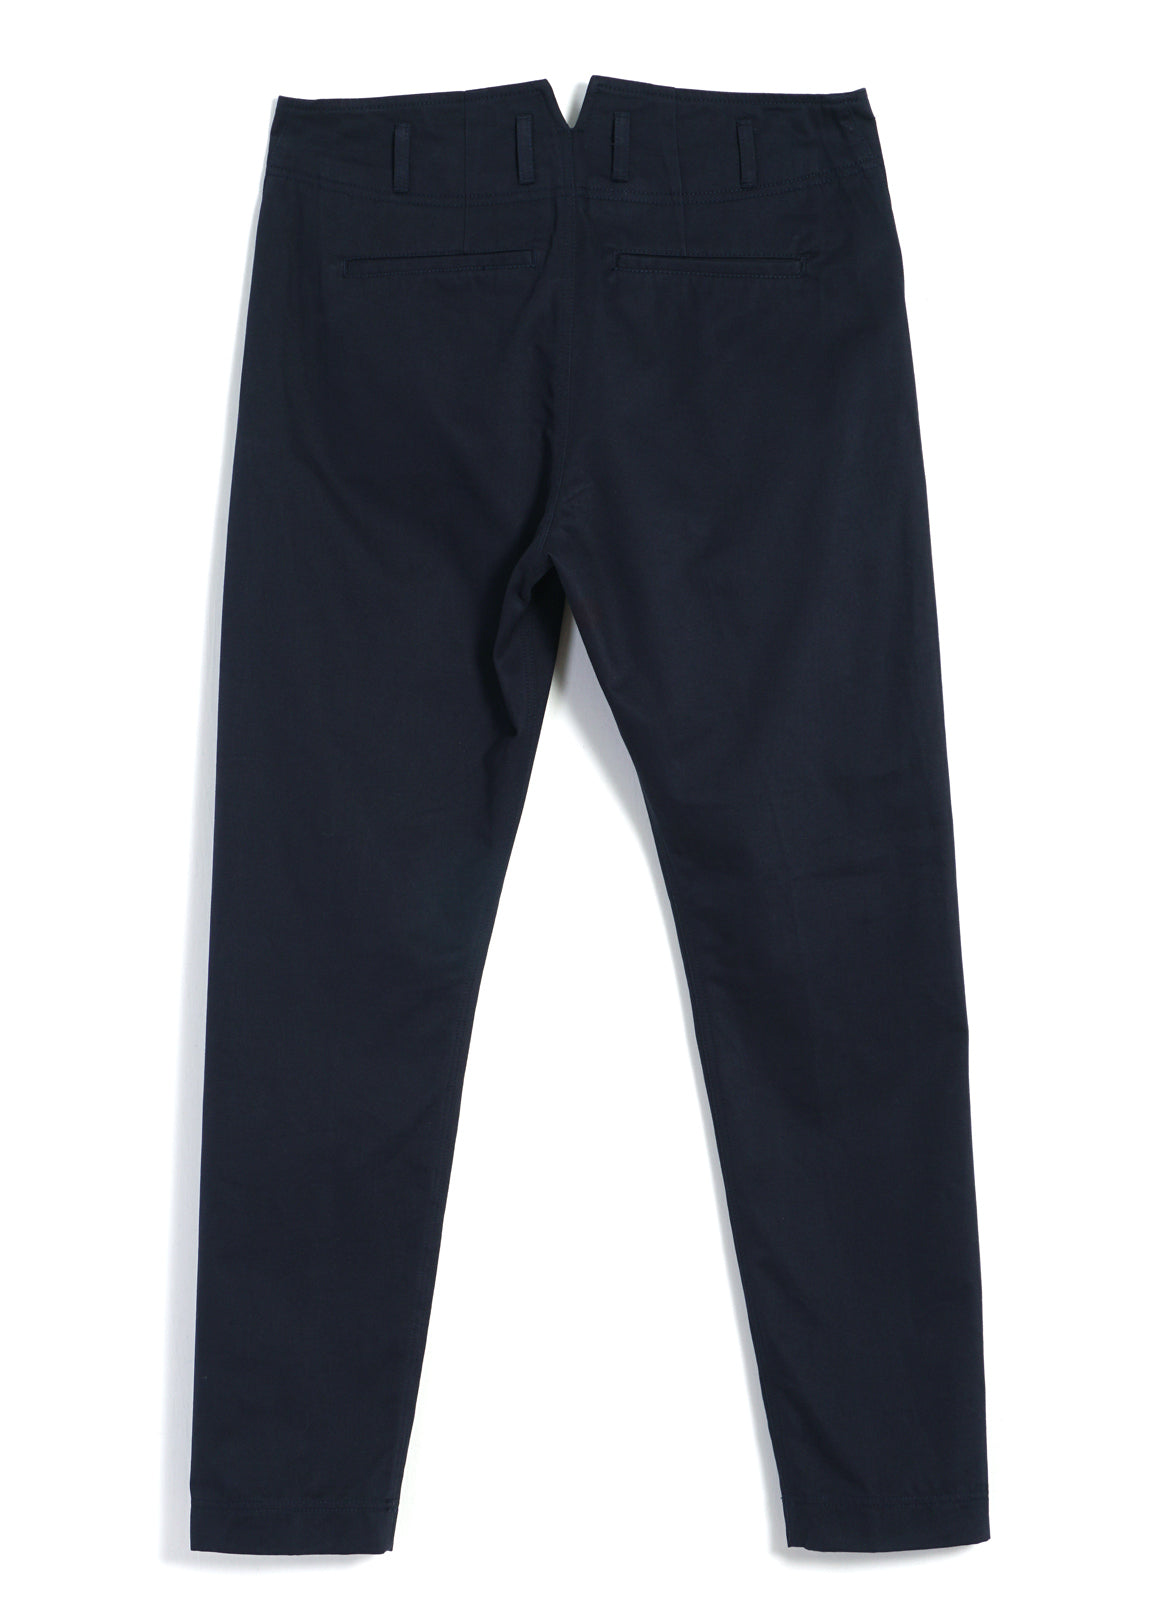 SVENNING | Slim Fit Everyday Trousers | Navy